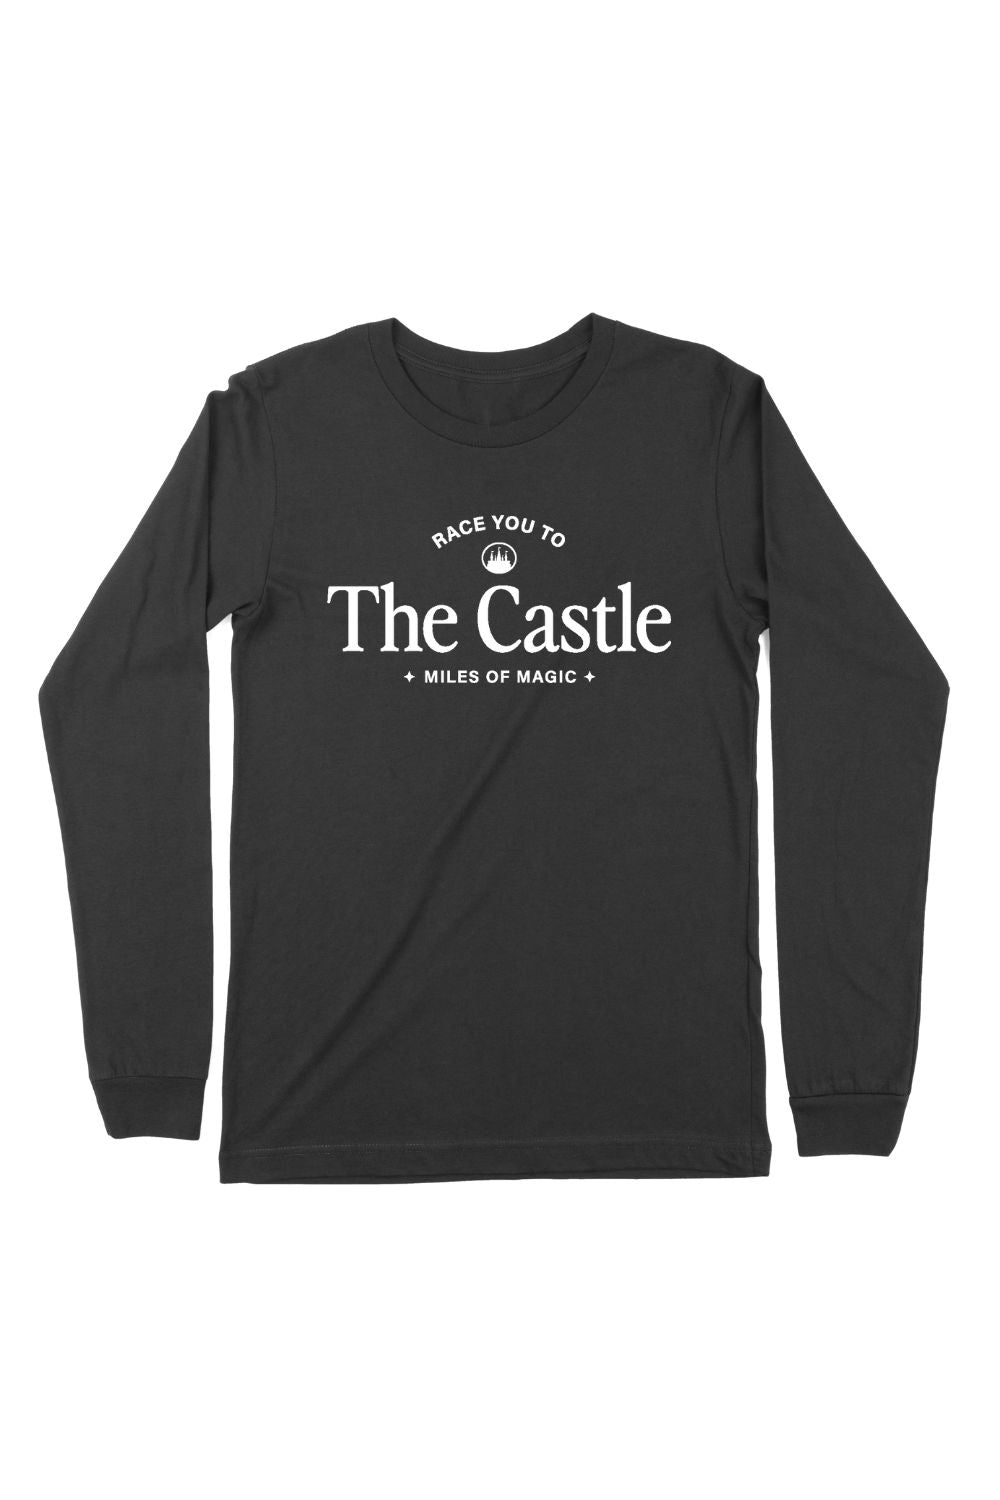 The Castle Long Sleeve